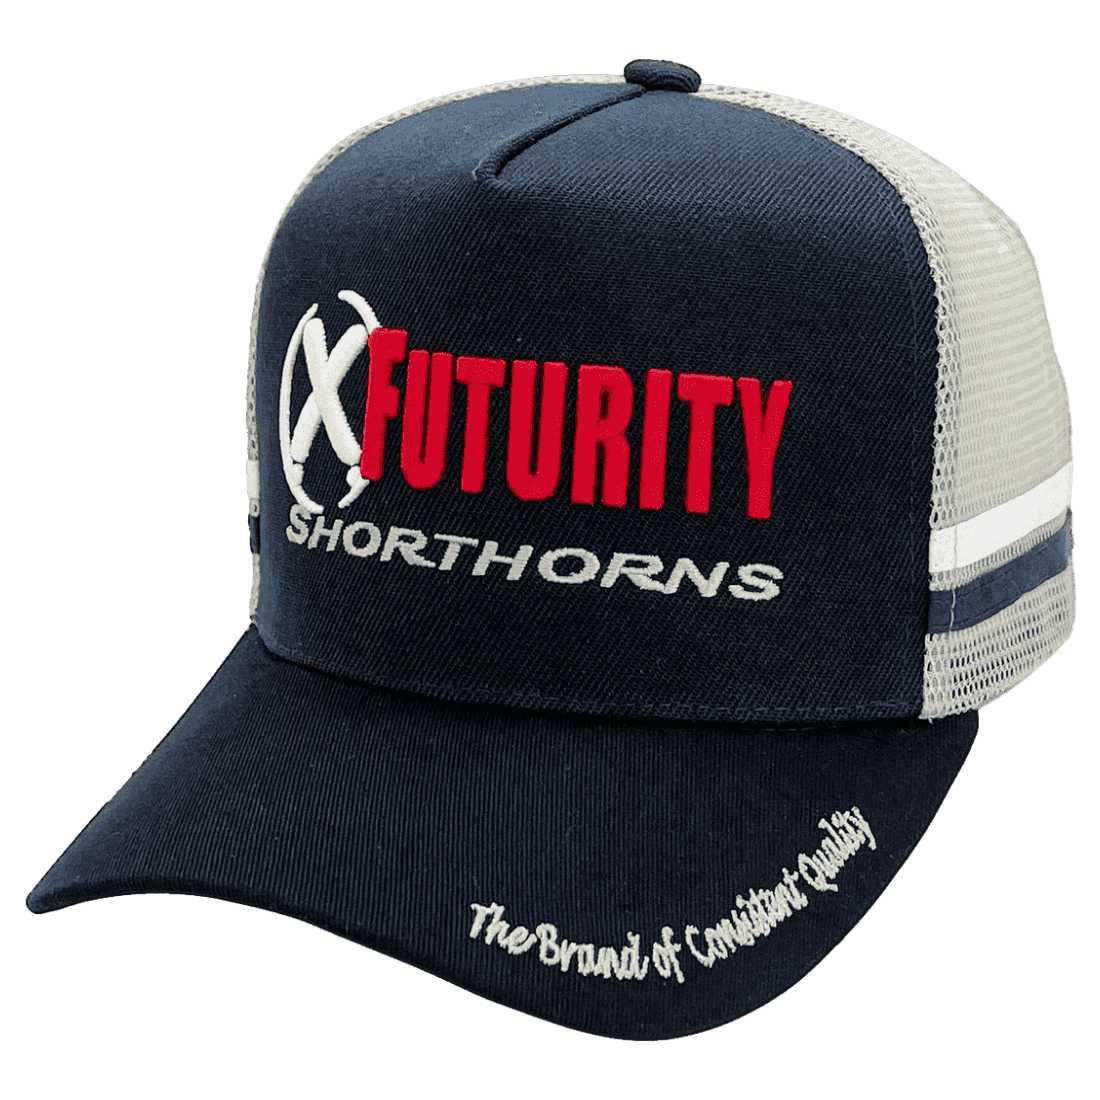 Futurity Shorthorns Baradine NSW - Midrange Aussie Trucker Hats